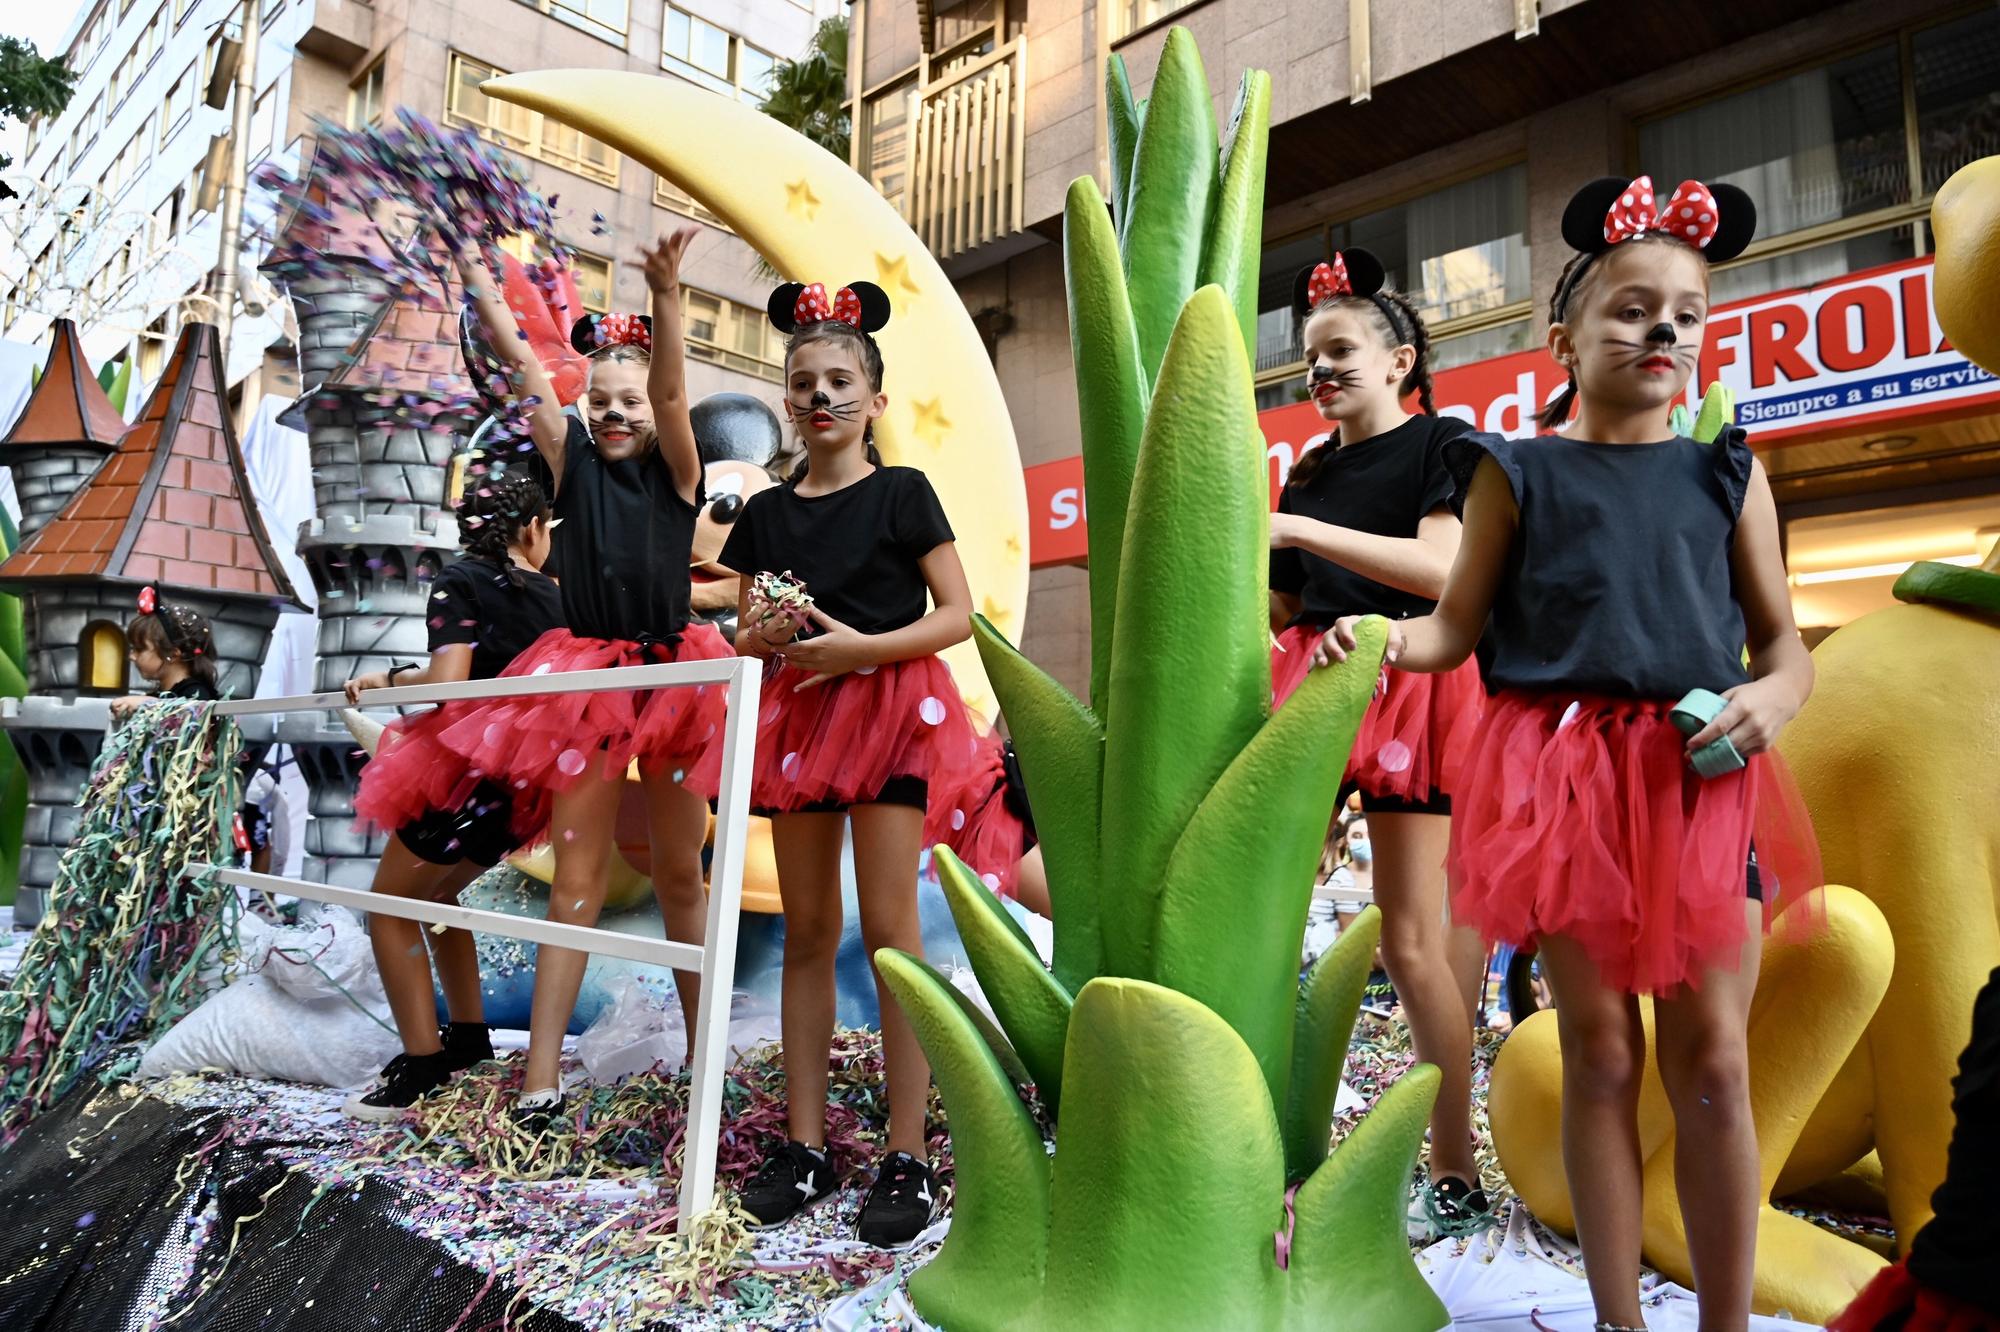 La Batalla de Flores vuelve a teñir de color las calles de Pontevedra